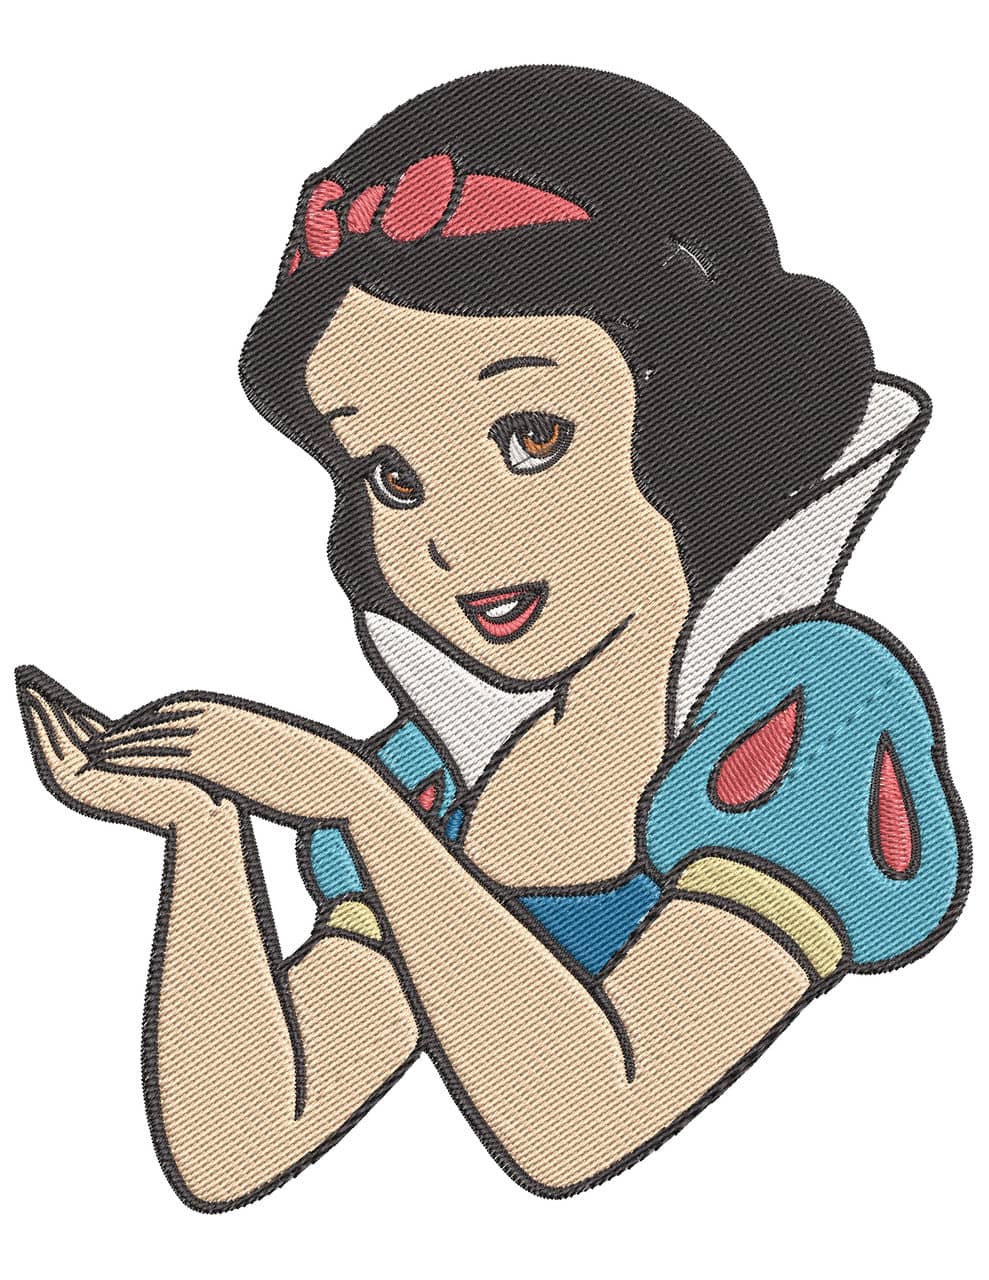 Snow White Princess Disney Seven Dwarfs Embroidery Design 020 Digital Embroidery Designs 